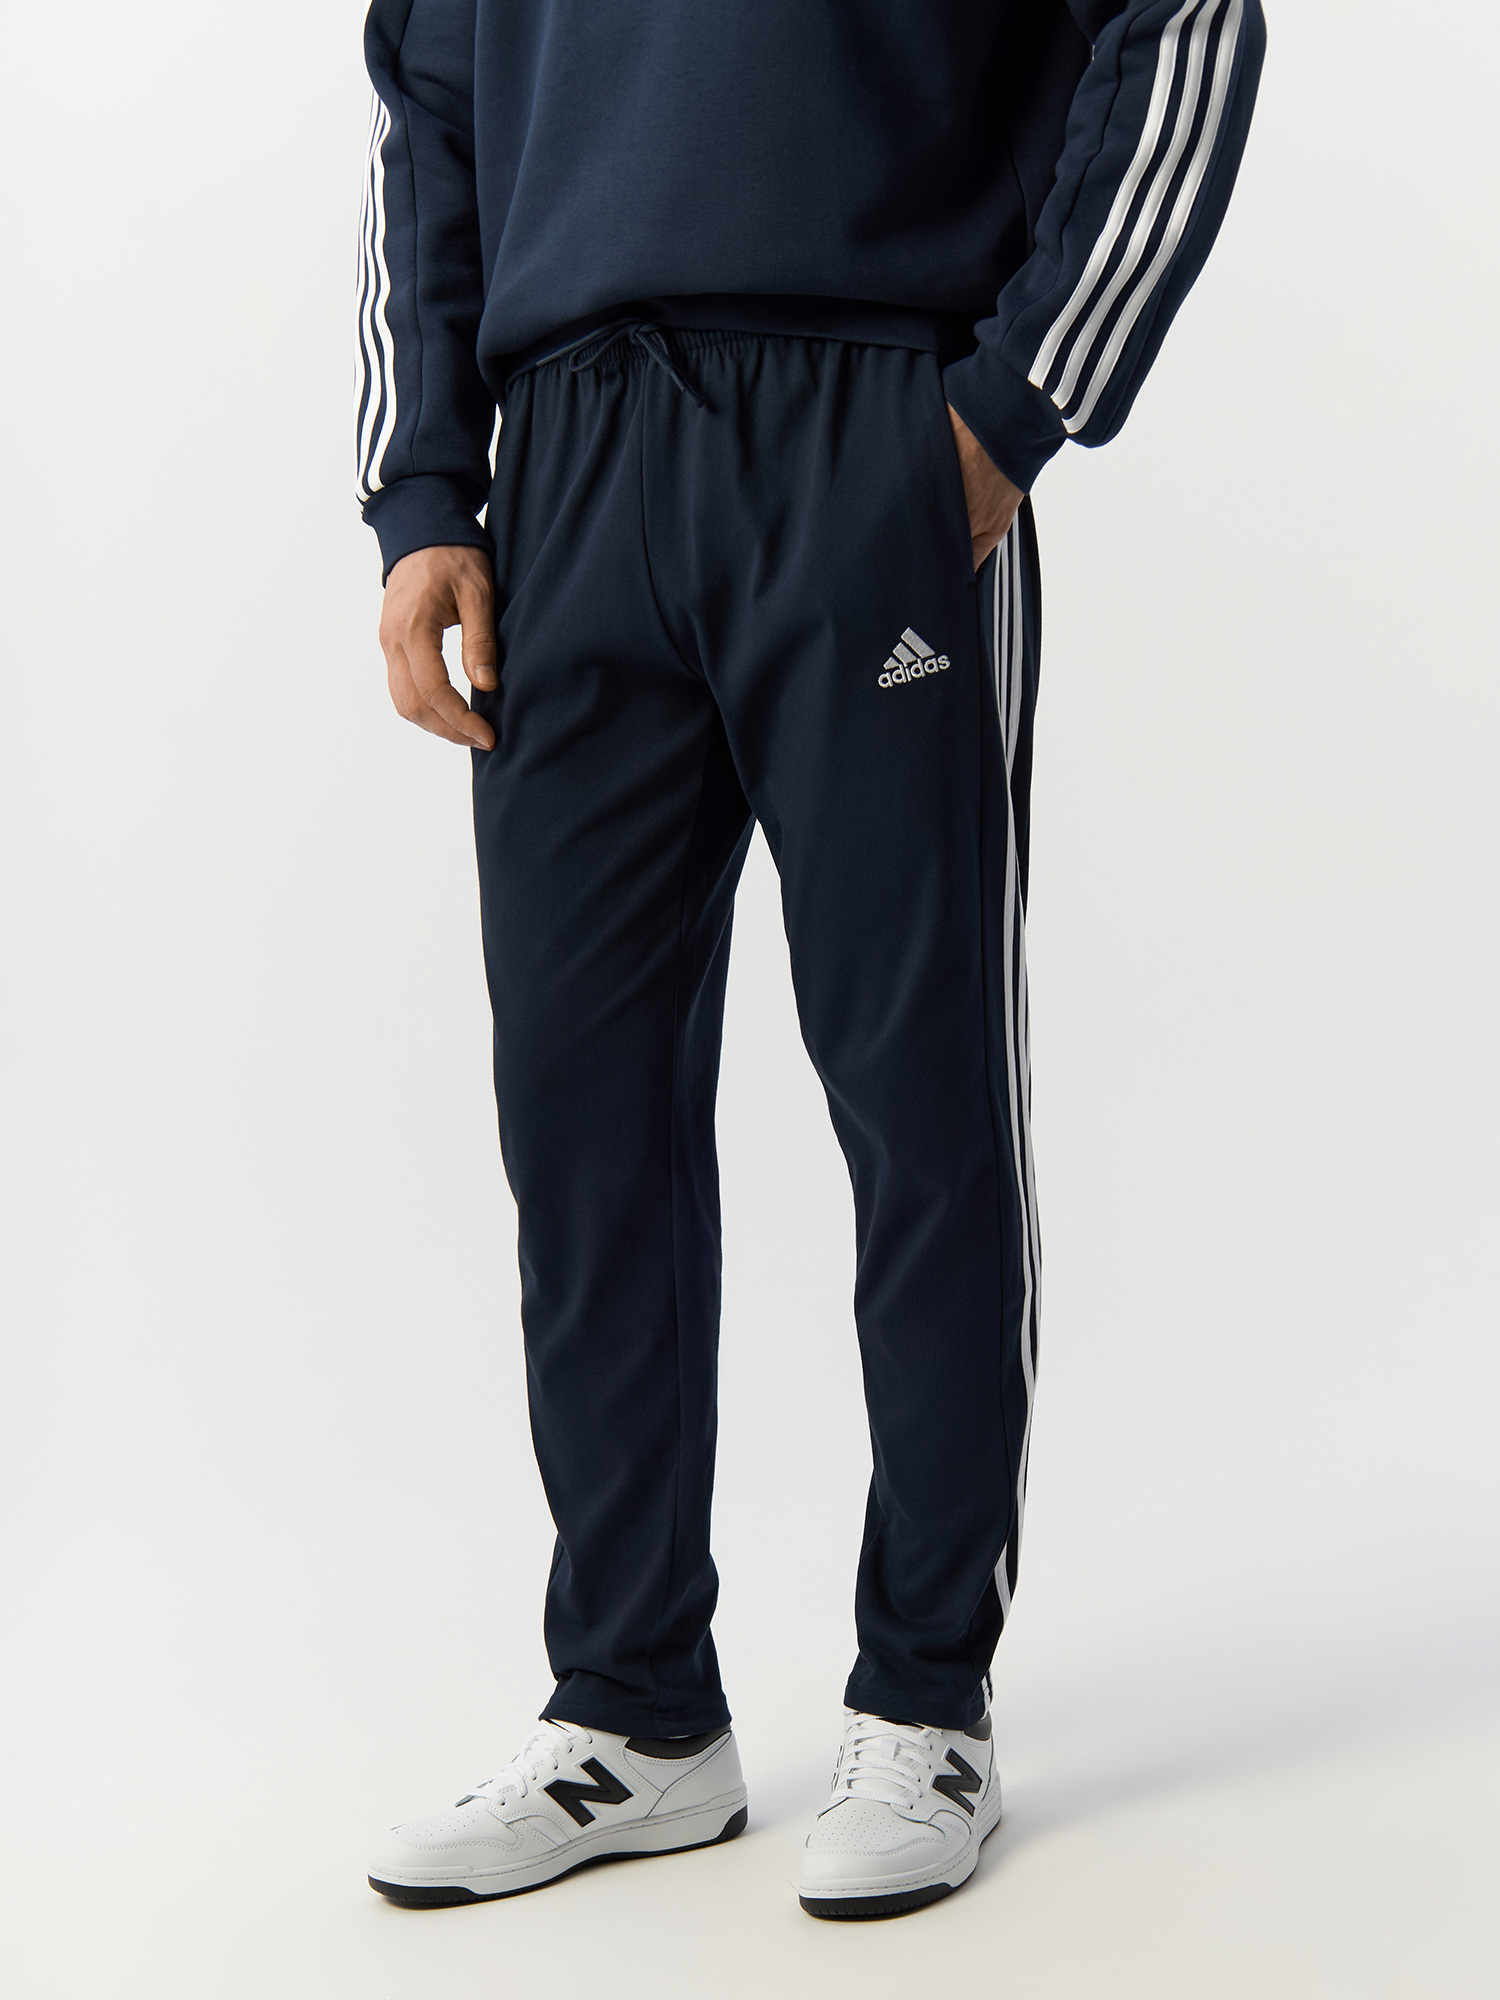 Брюки Adidas для мужчин, спортивные, IC0045, размер 4XL, чёрно-белые-AA35